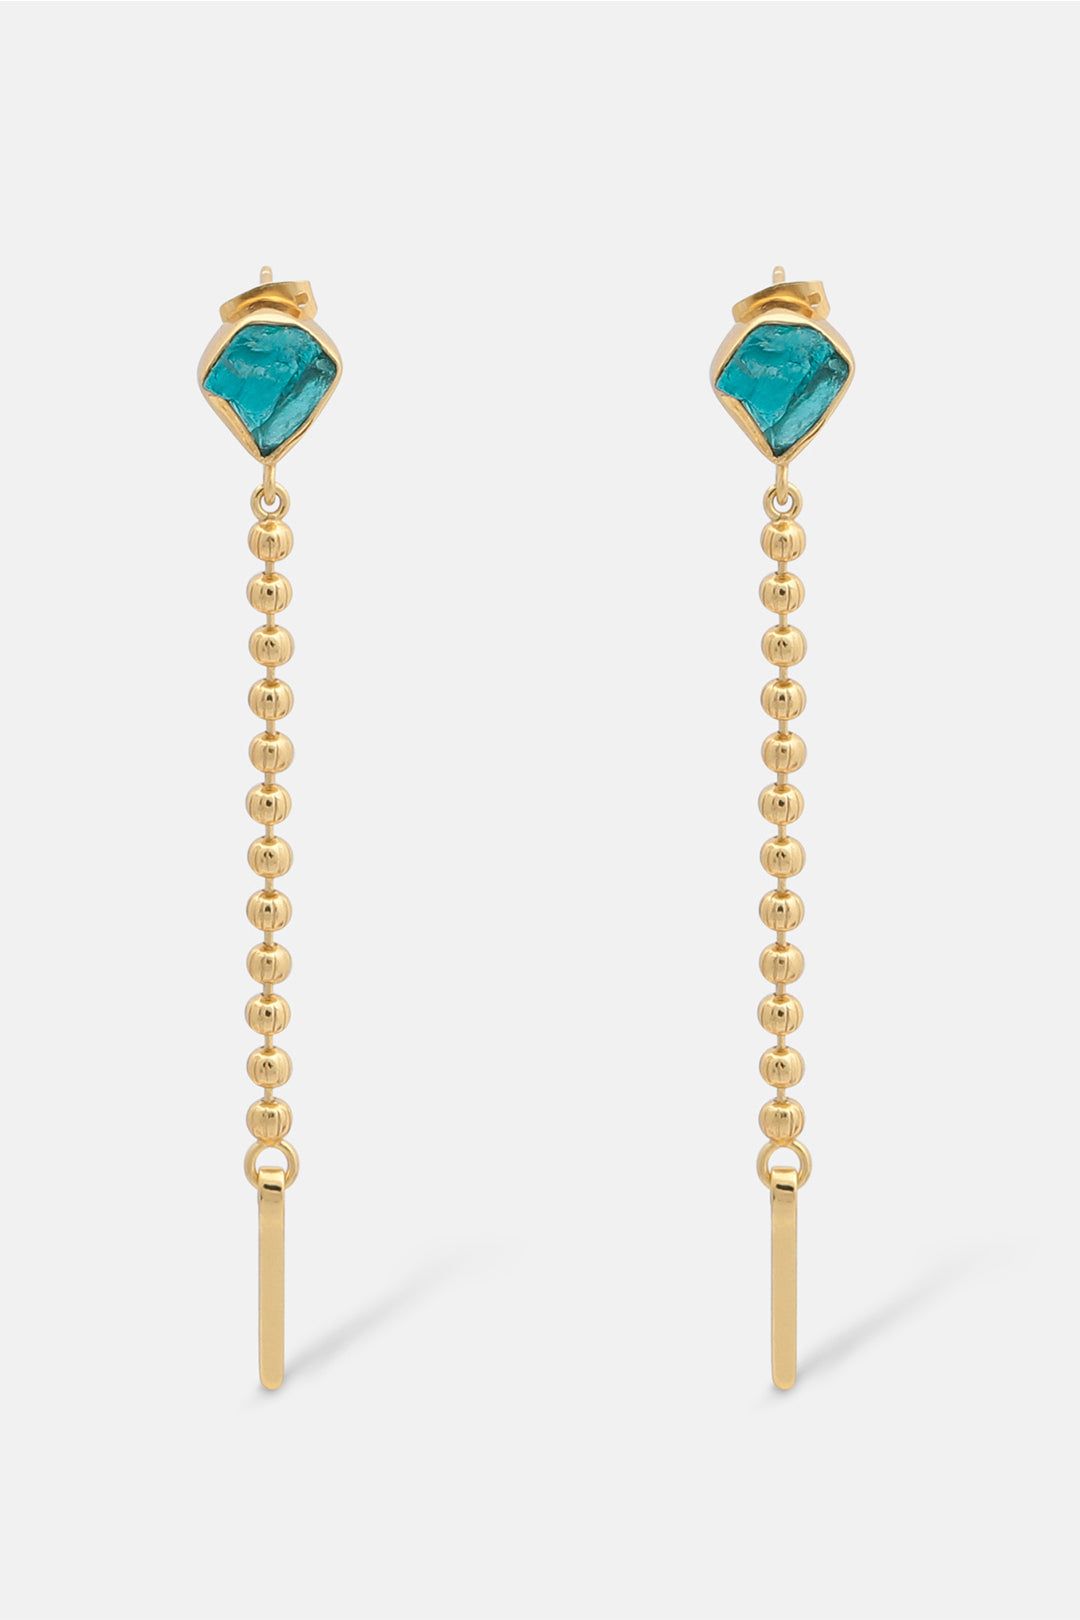 Louve Blue Appatite Gemstone Gold Drop Earrings Mamour Paris Jewelry